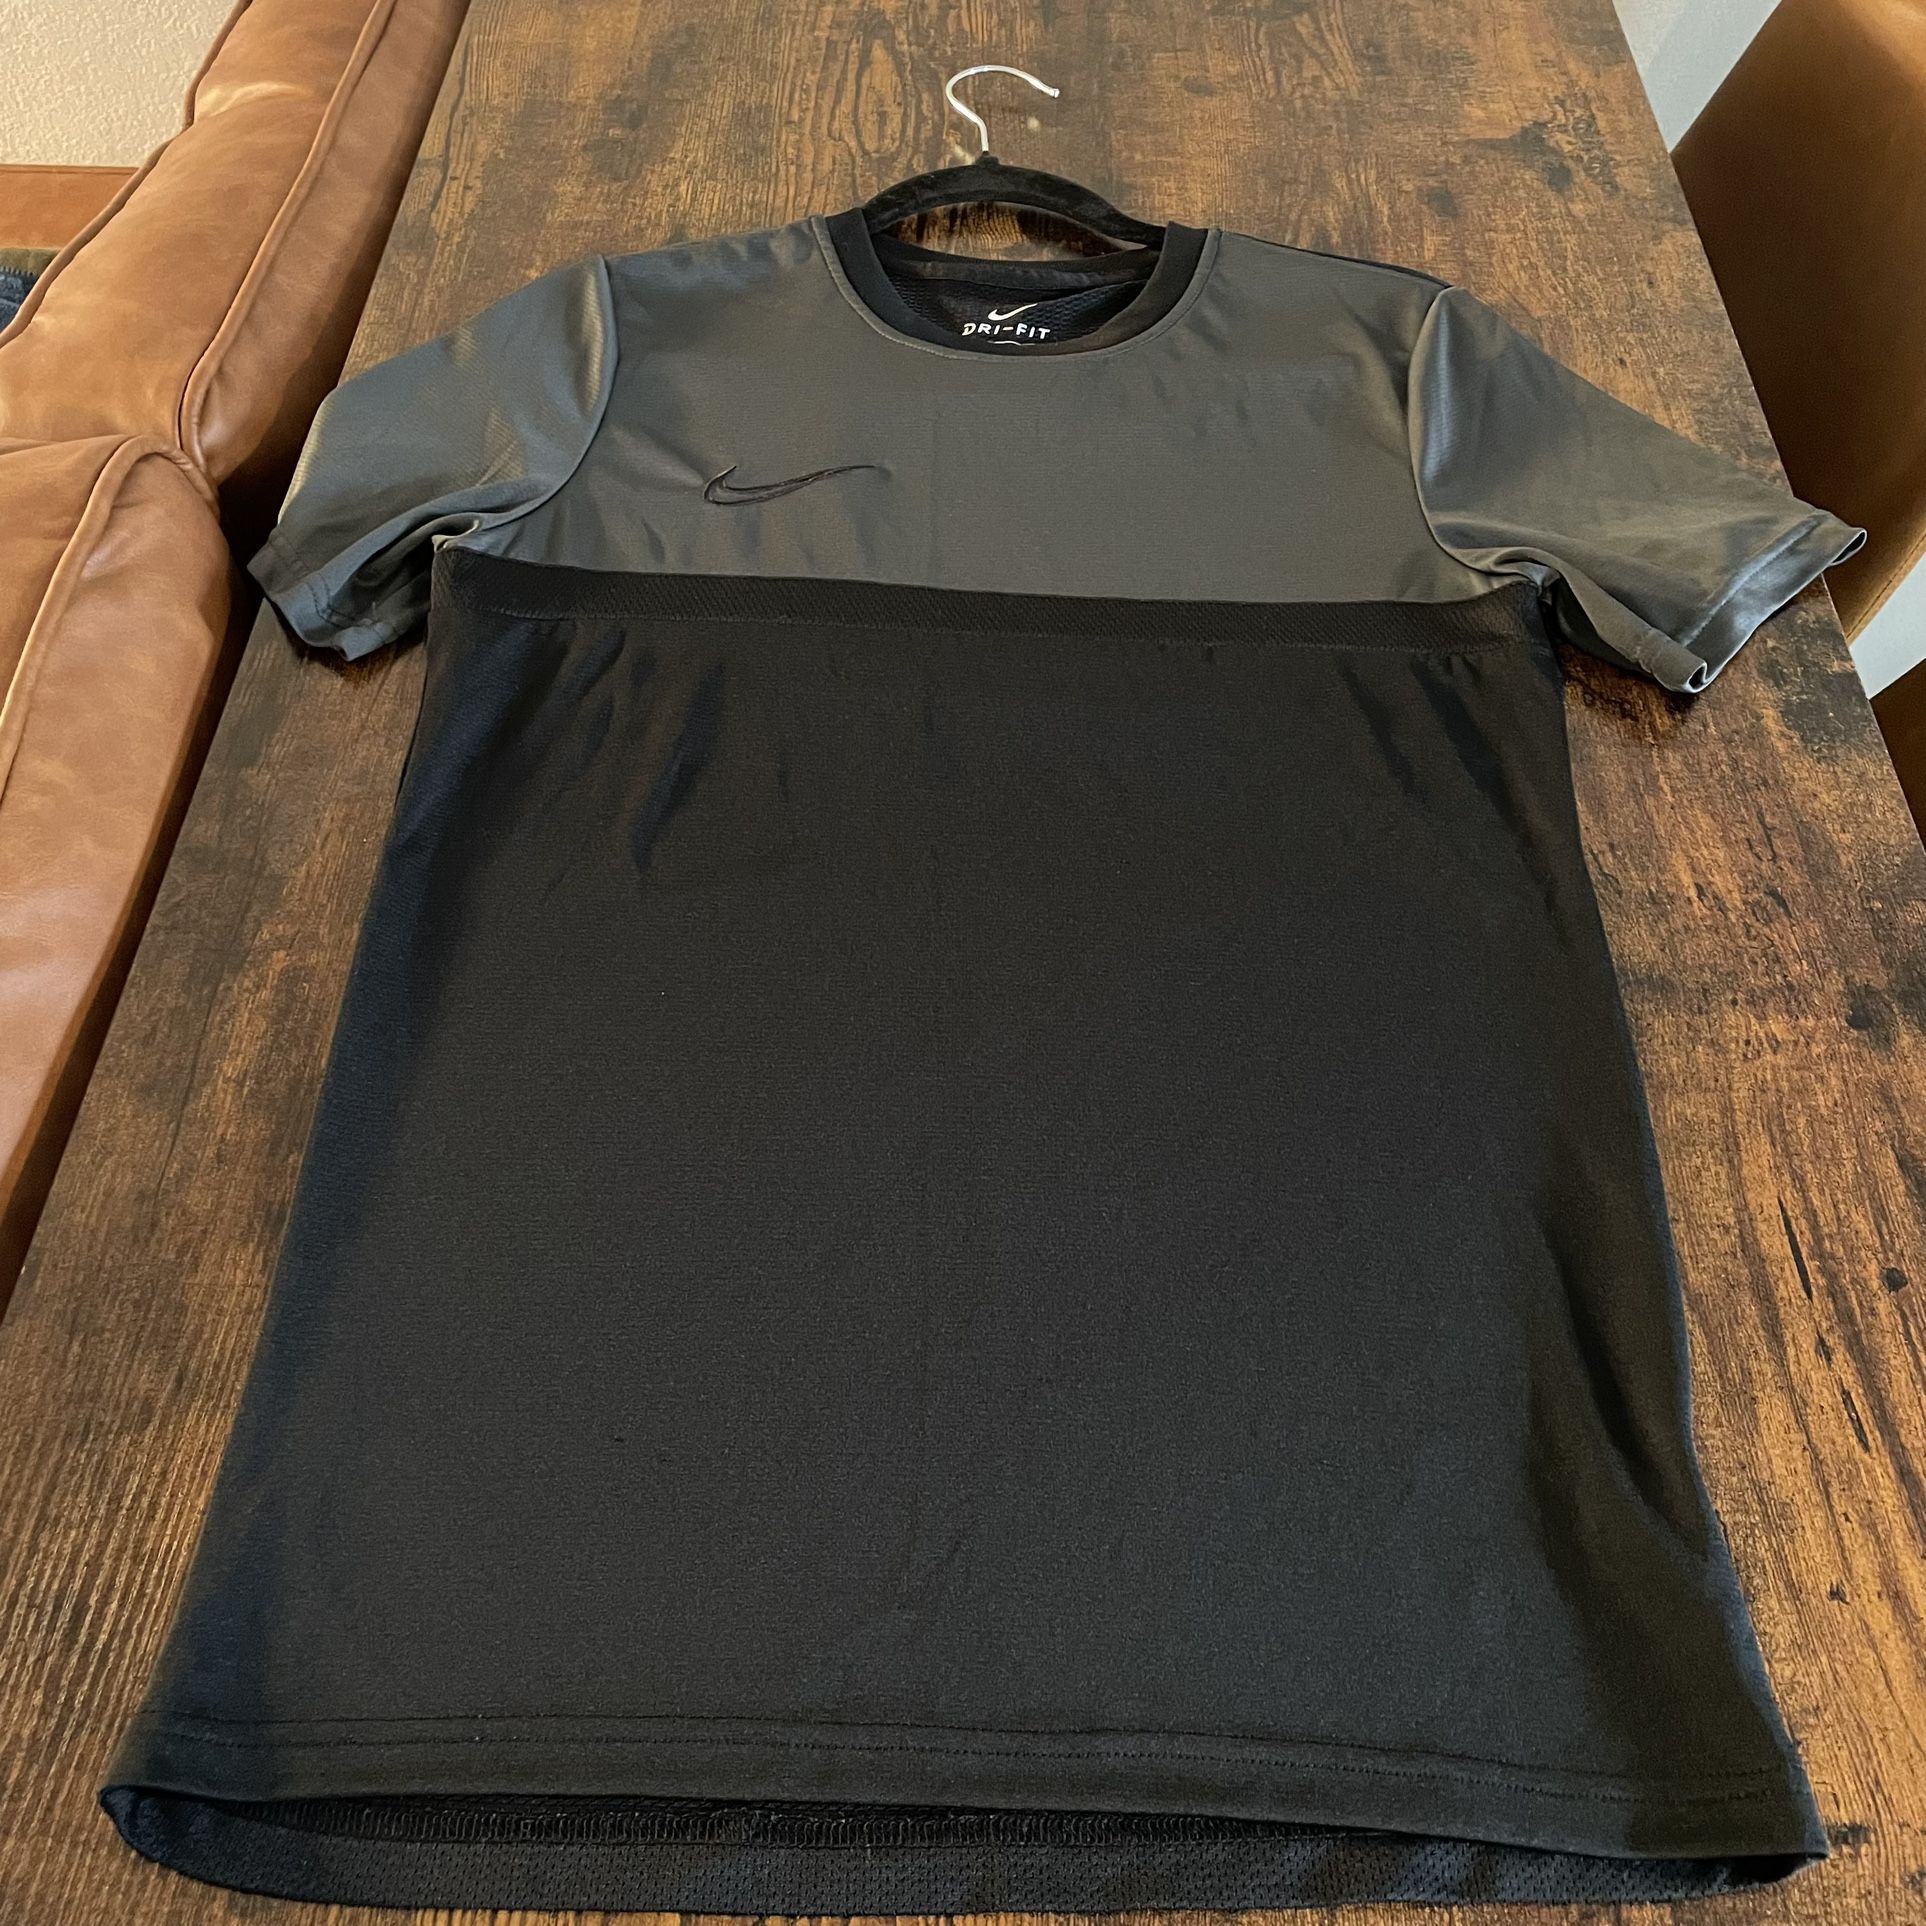 Nike black/grey active shirt